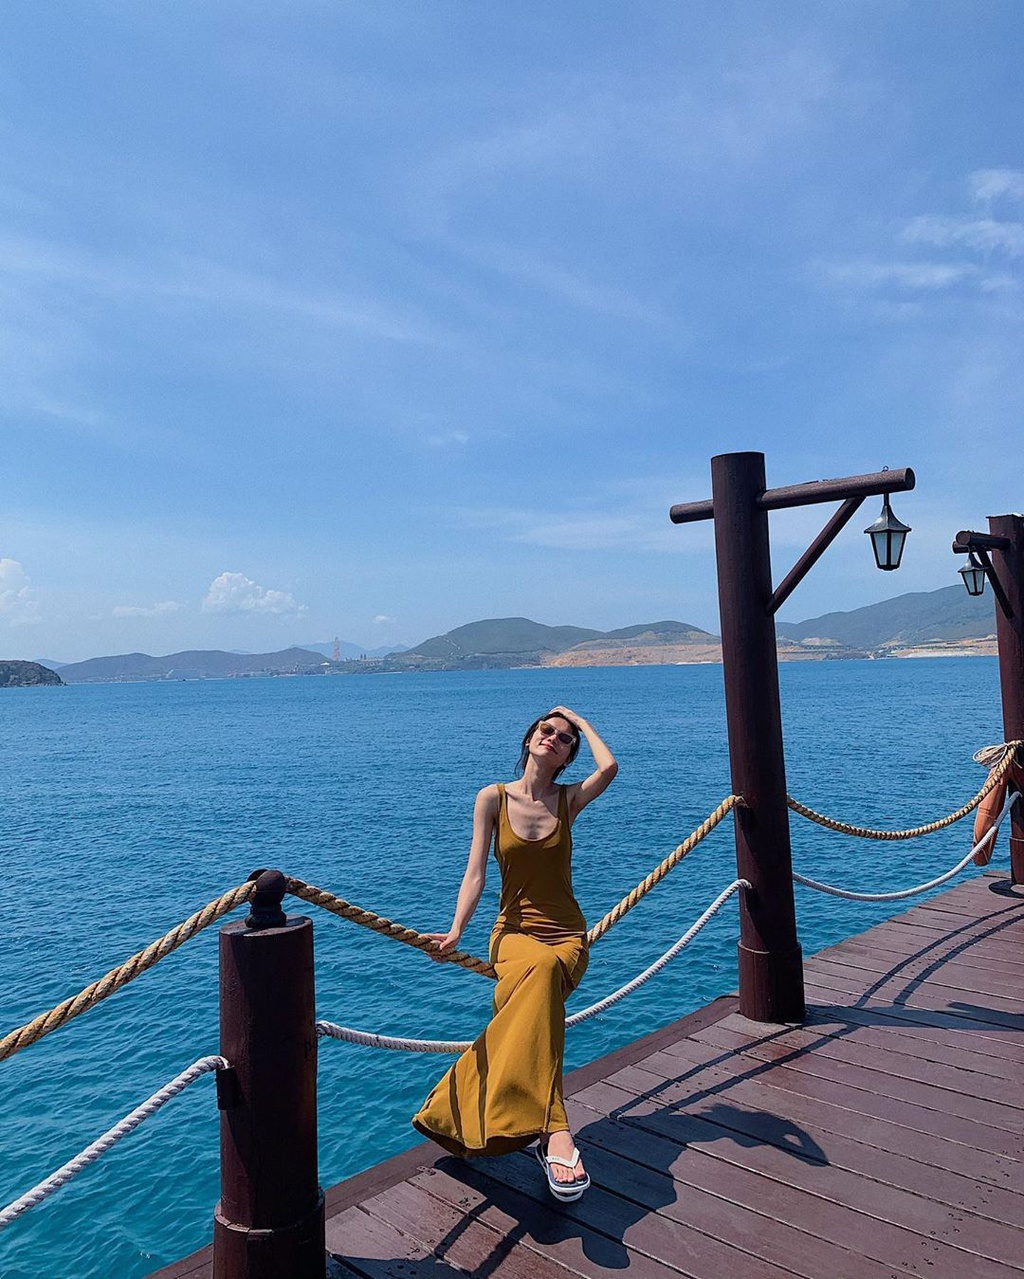 Alluring wooden bridges amidst blue sea in Vietnam's famous tourism hub